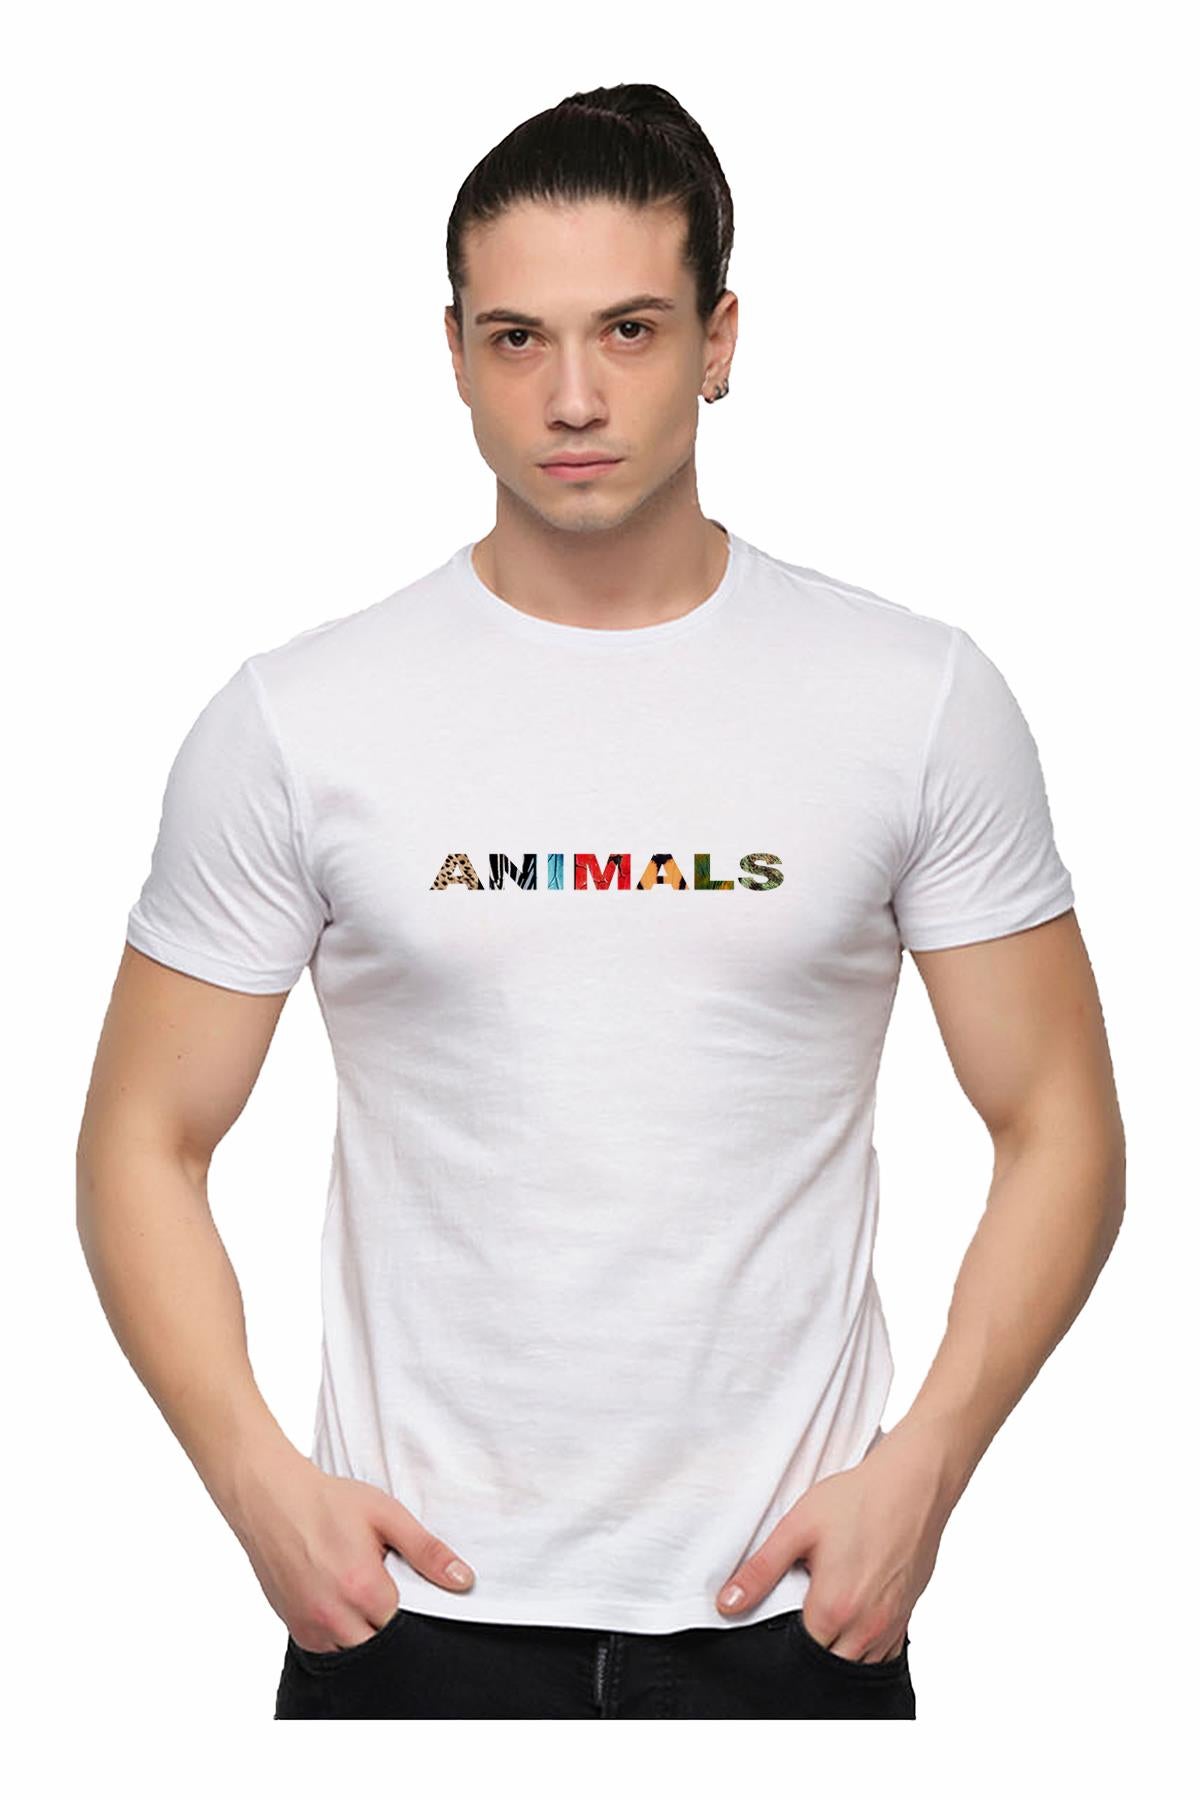 Animals Printed Cotton Men's T -shirt